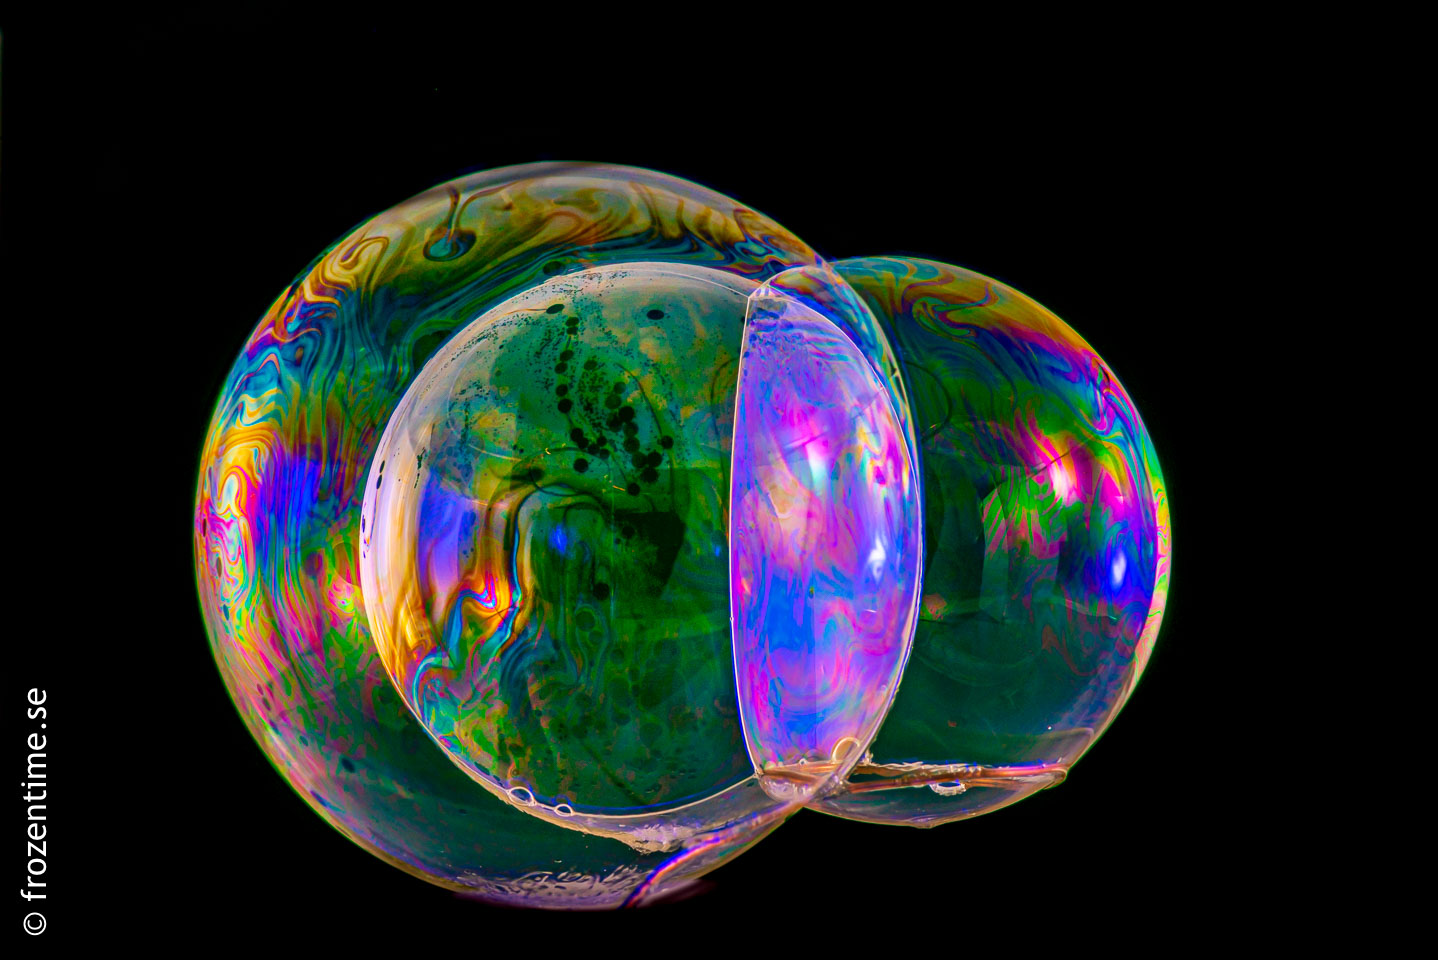 bubbles - Frozentime Images Photography